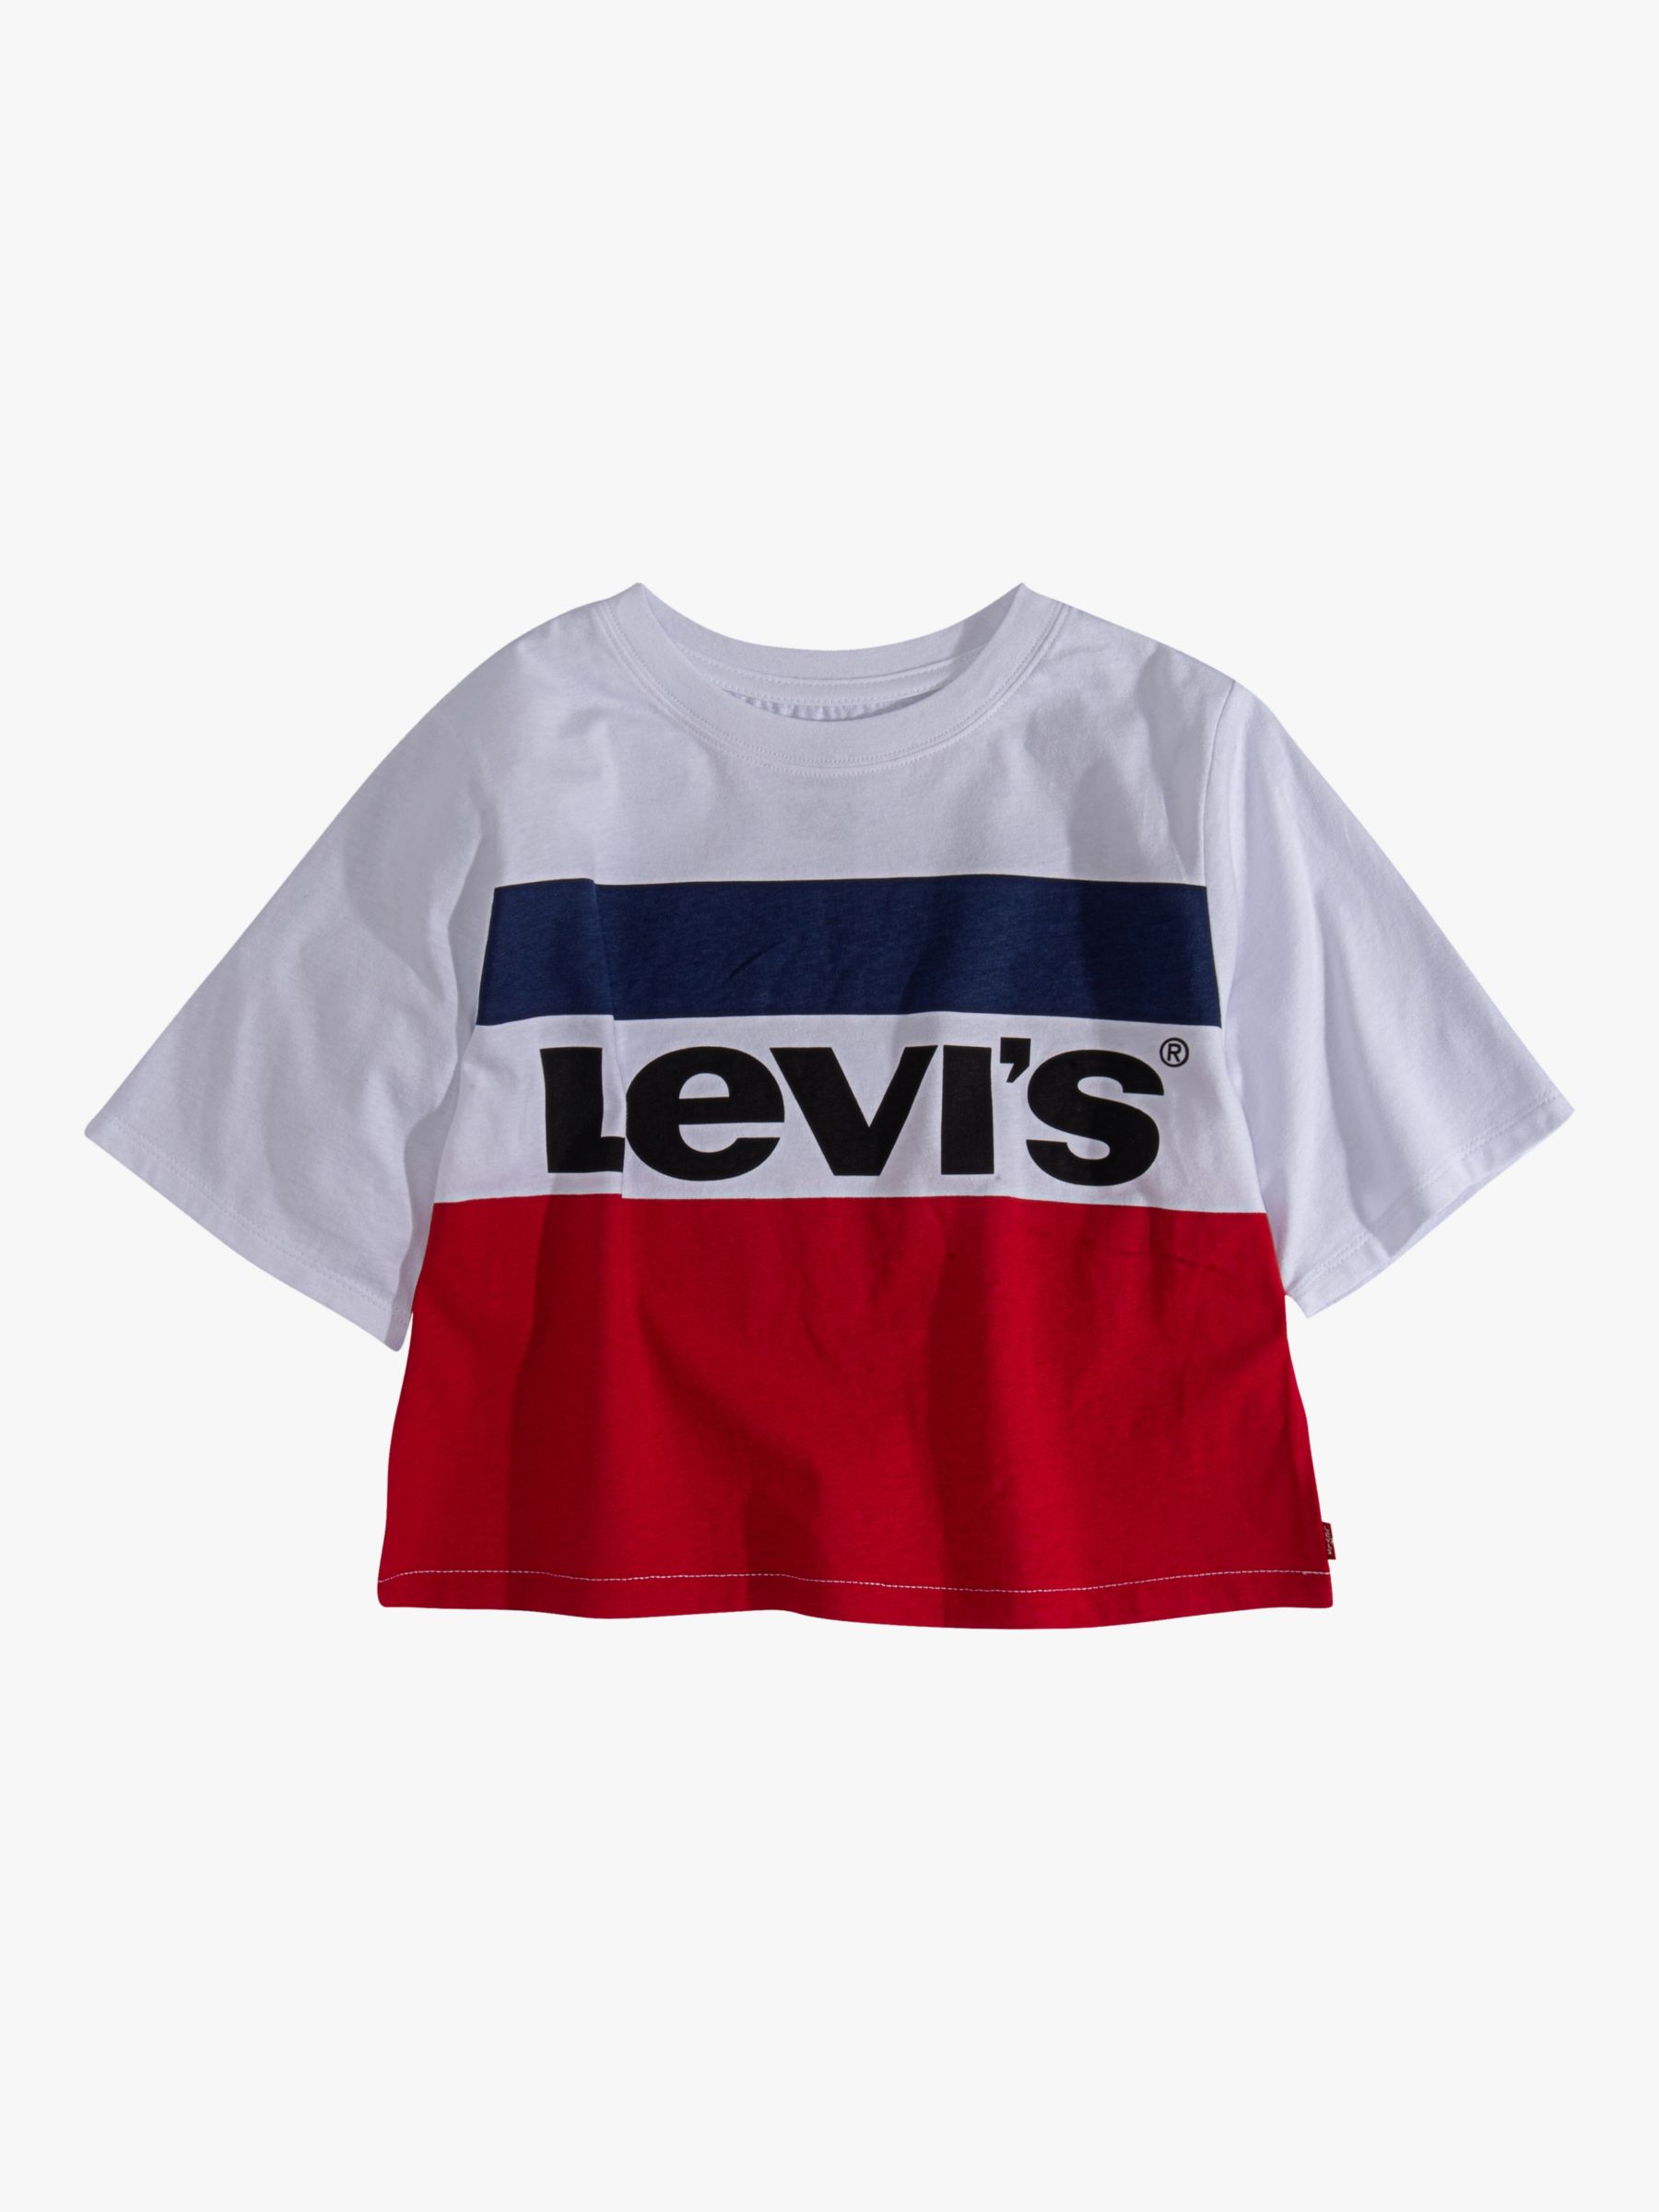 levi's girls shirt